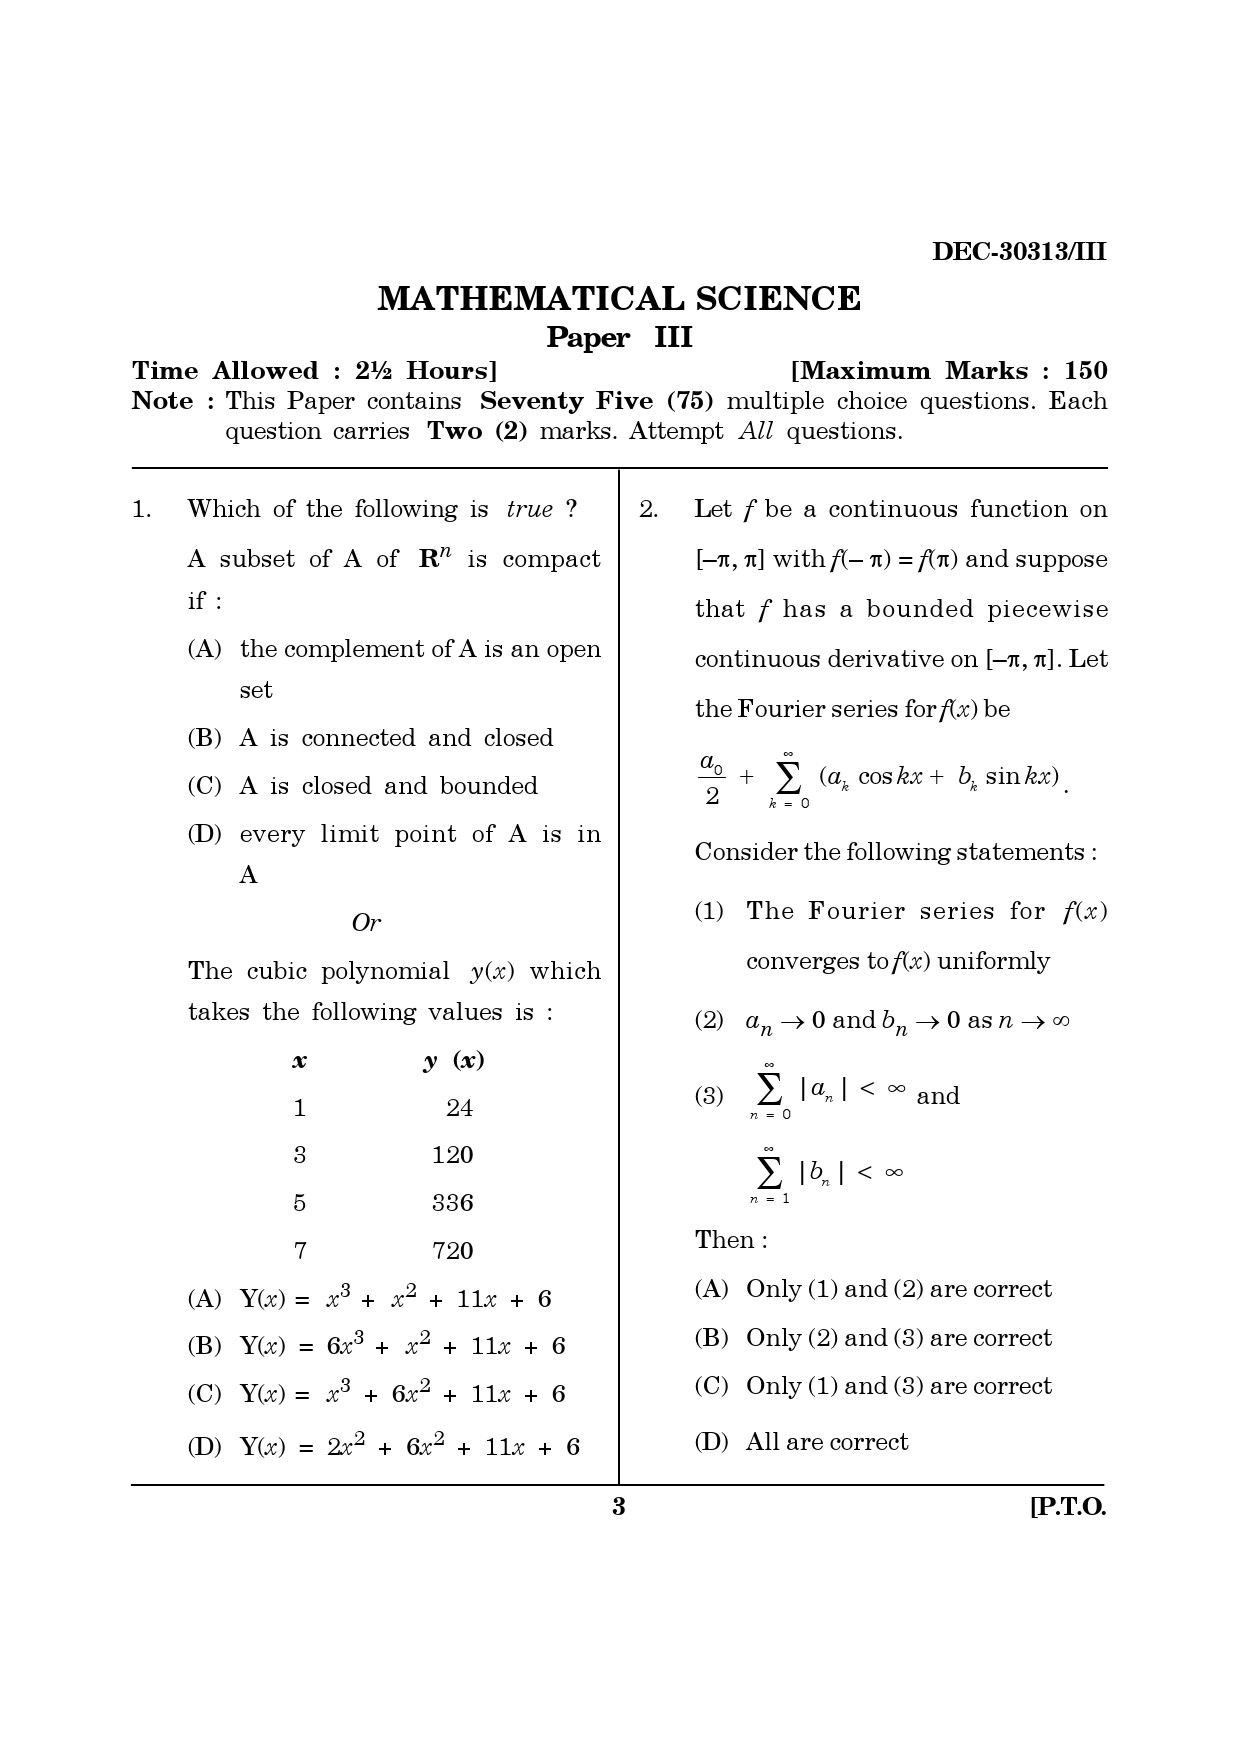 Maharashtra SET Mathematical Sciences Question Paper III December 2013 2